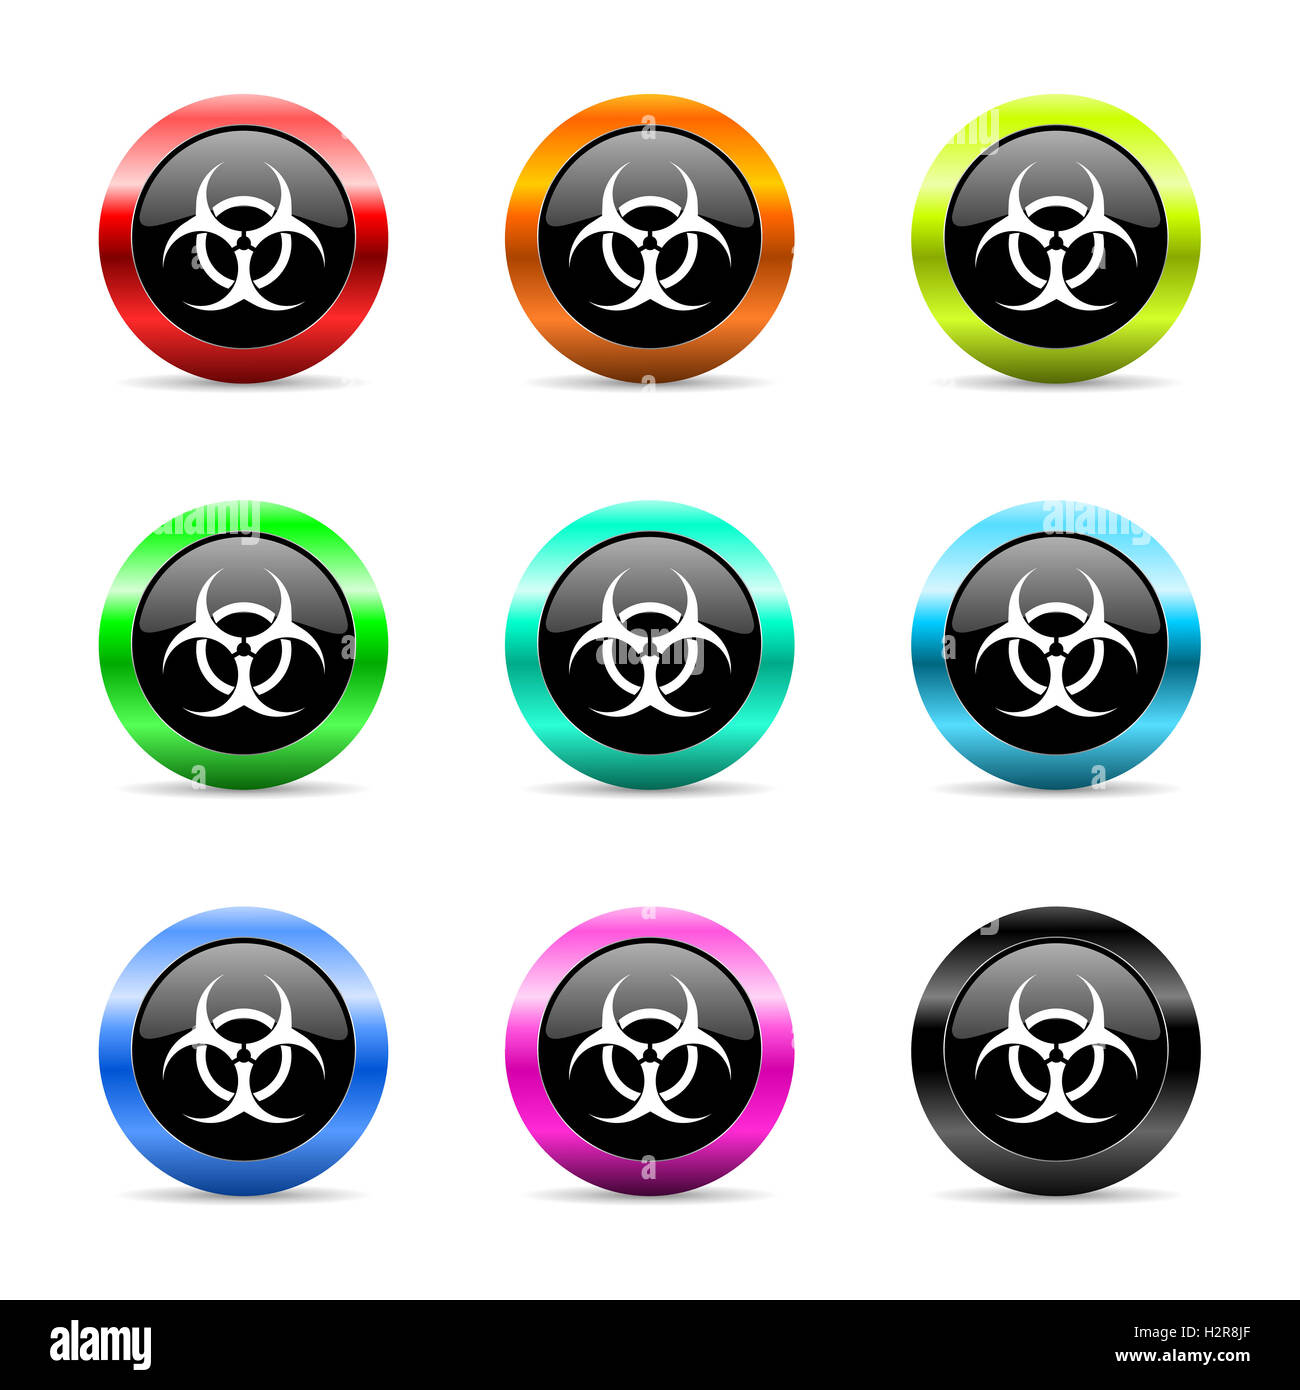 biohazard web icons set Stock Photo